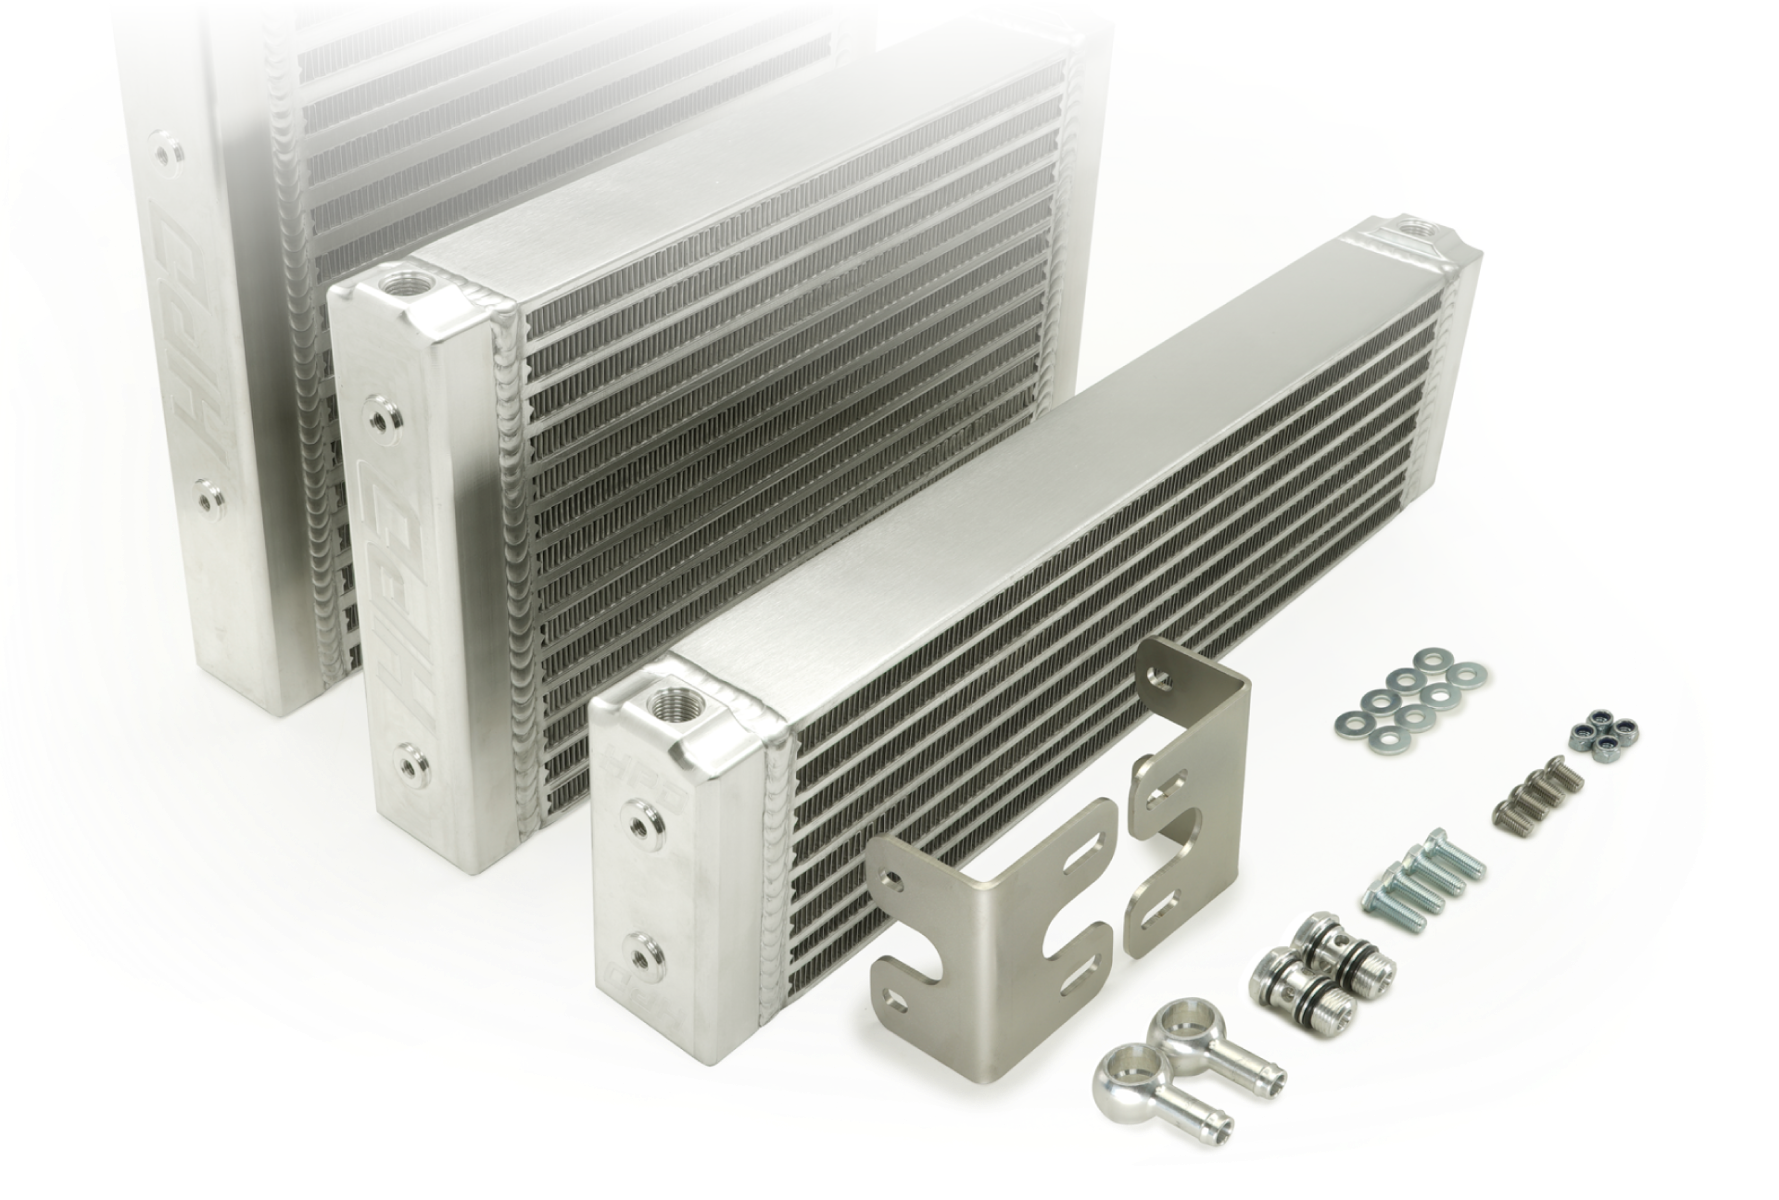 HPD Transmission coolers effectively lower transmission temperatures